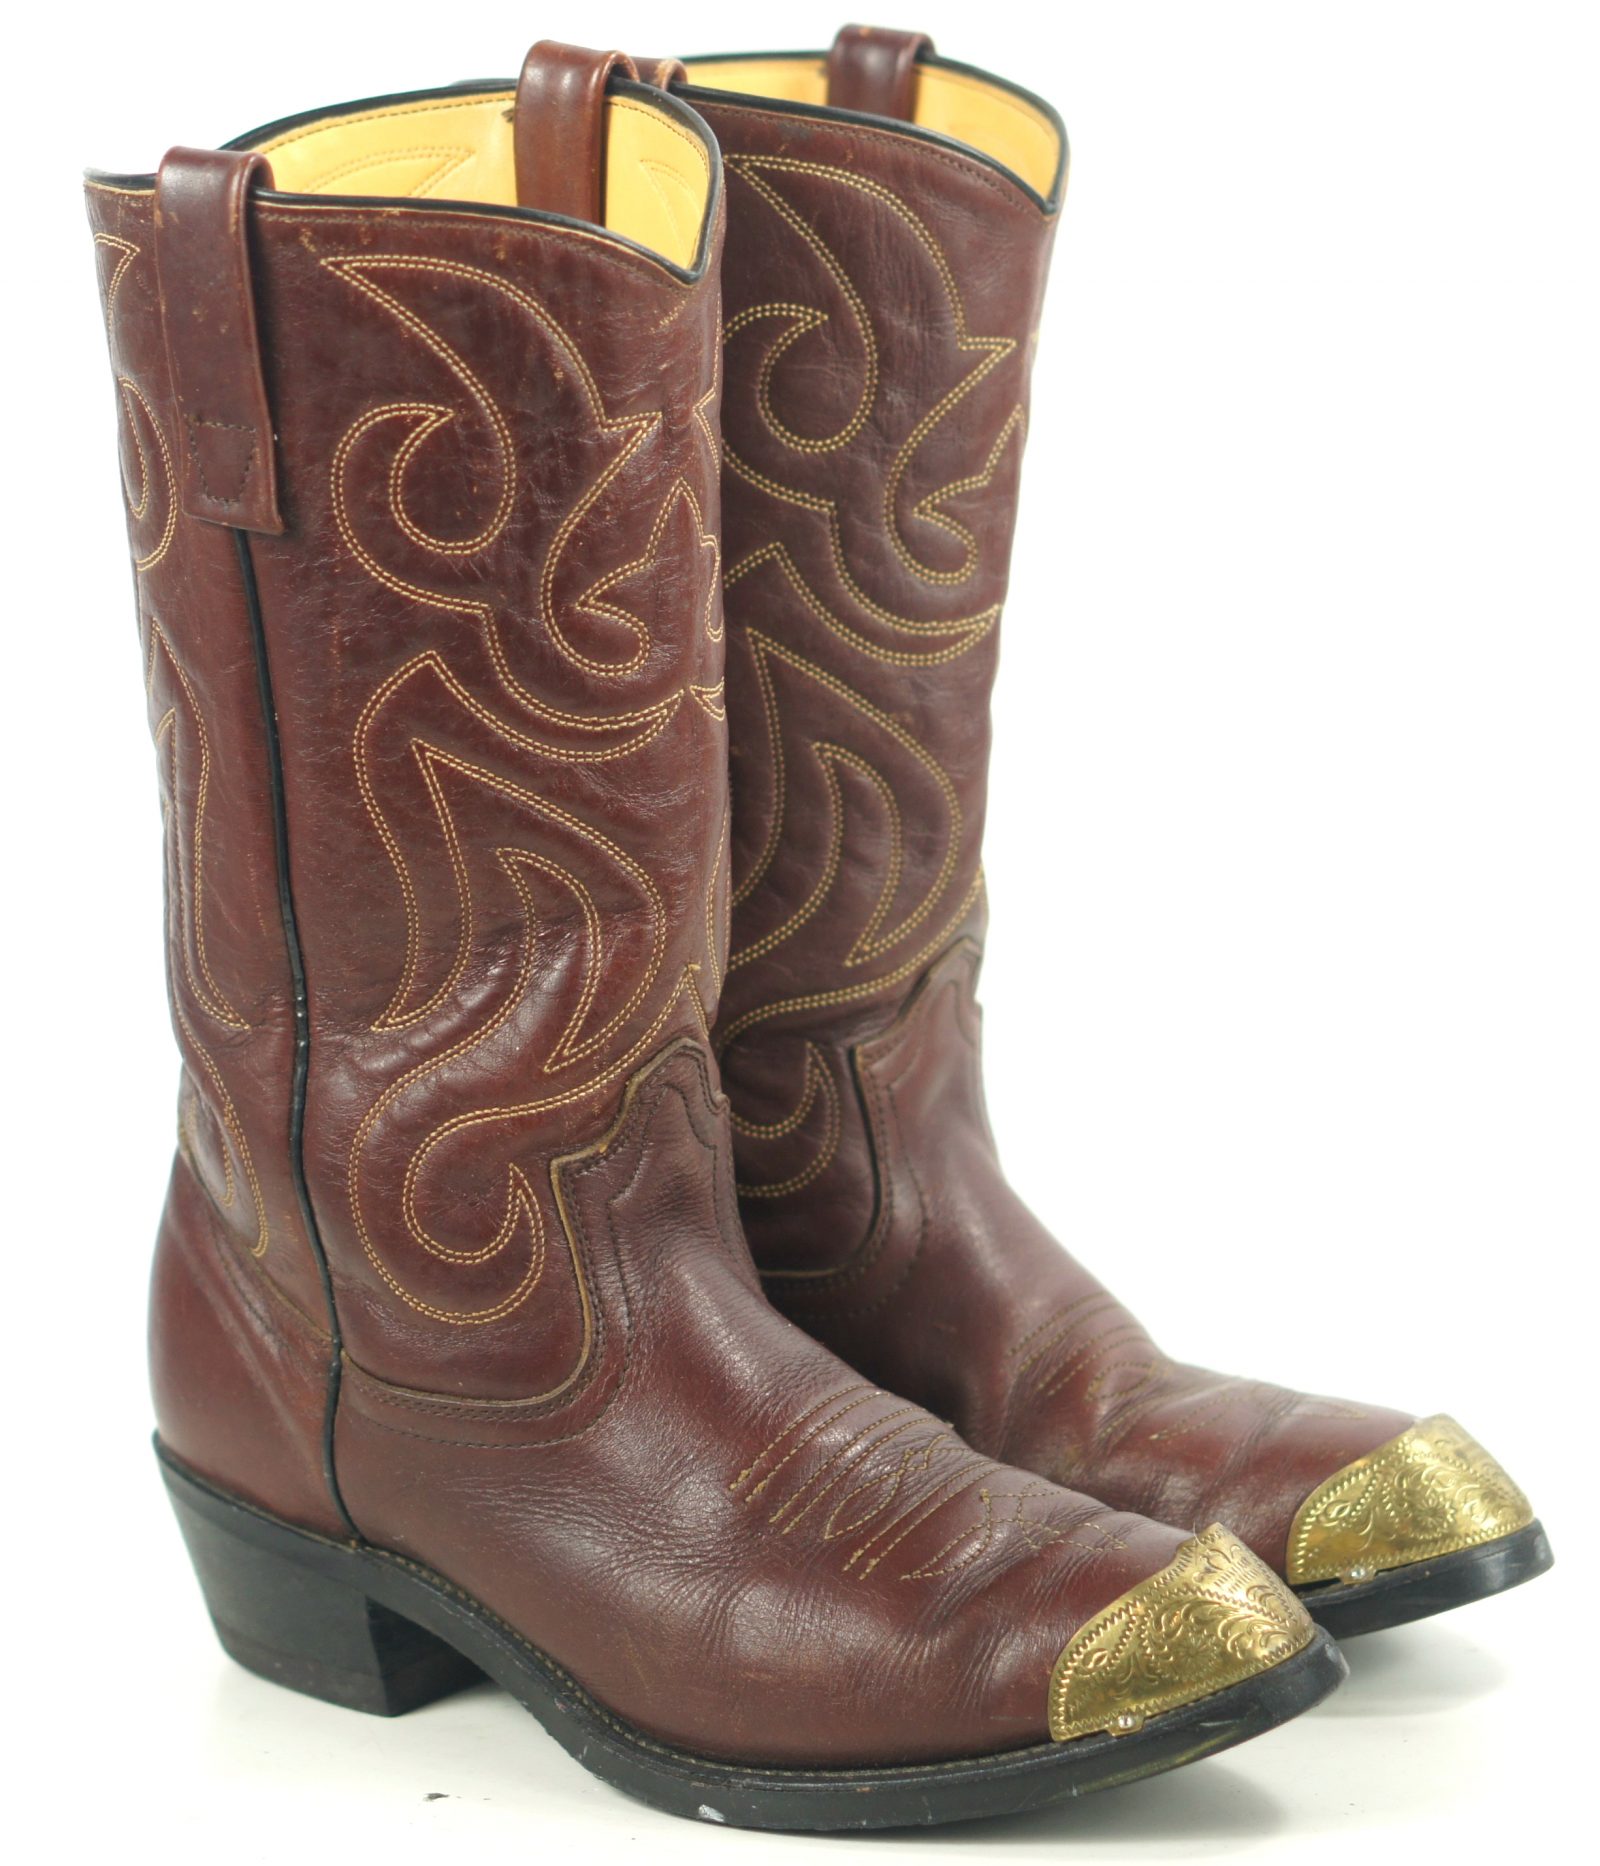 Mason Brown Leather Cowboy Western Work Boots Vinram Soles Vintage US Made (6)